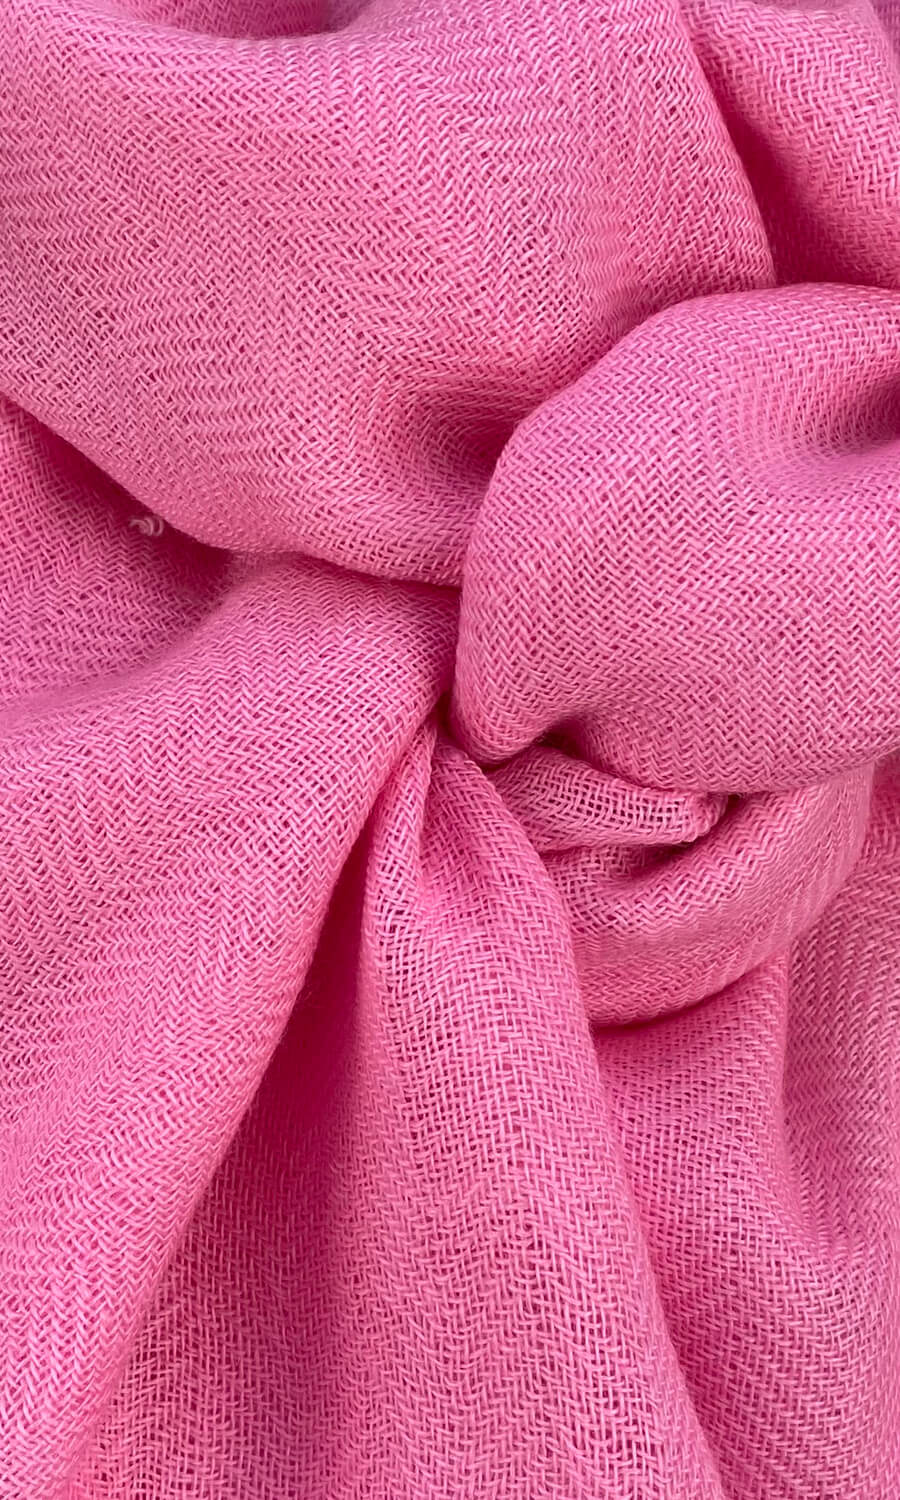 schmaler Kaschmirschal helles pink